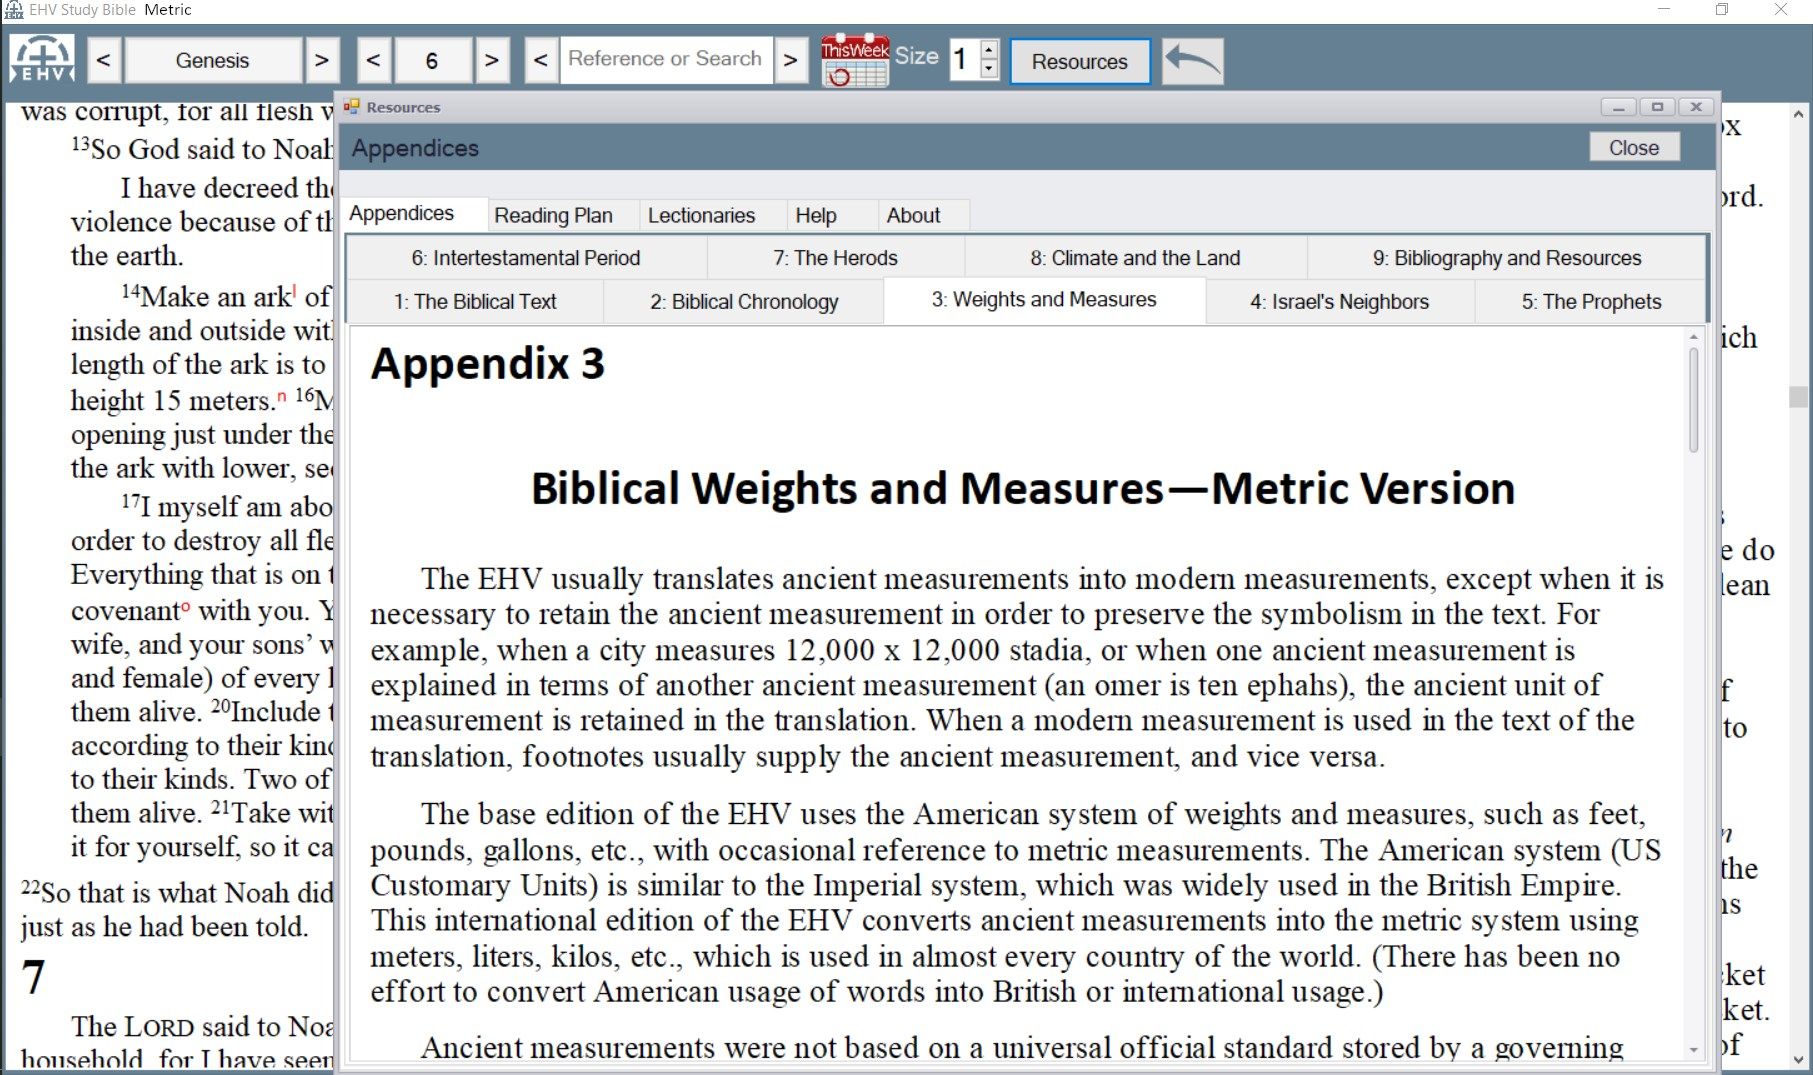 EHV Study Bible - Metric Edition